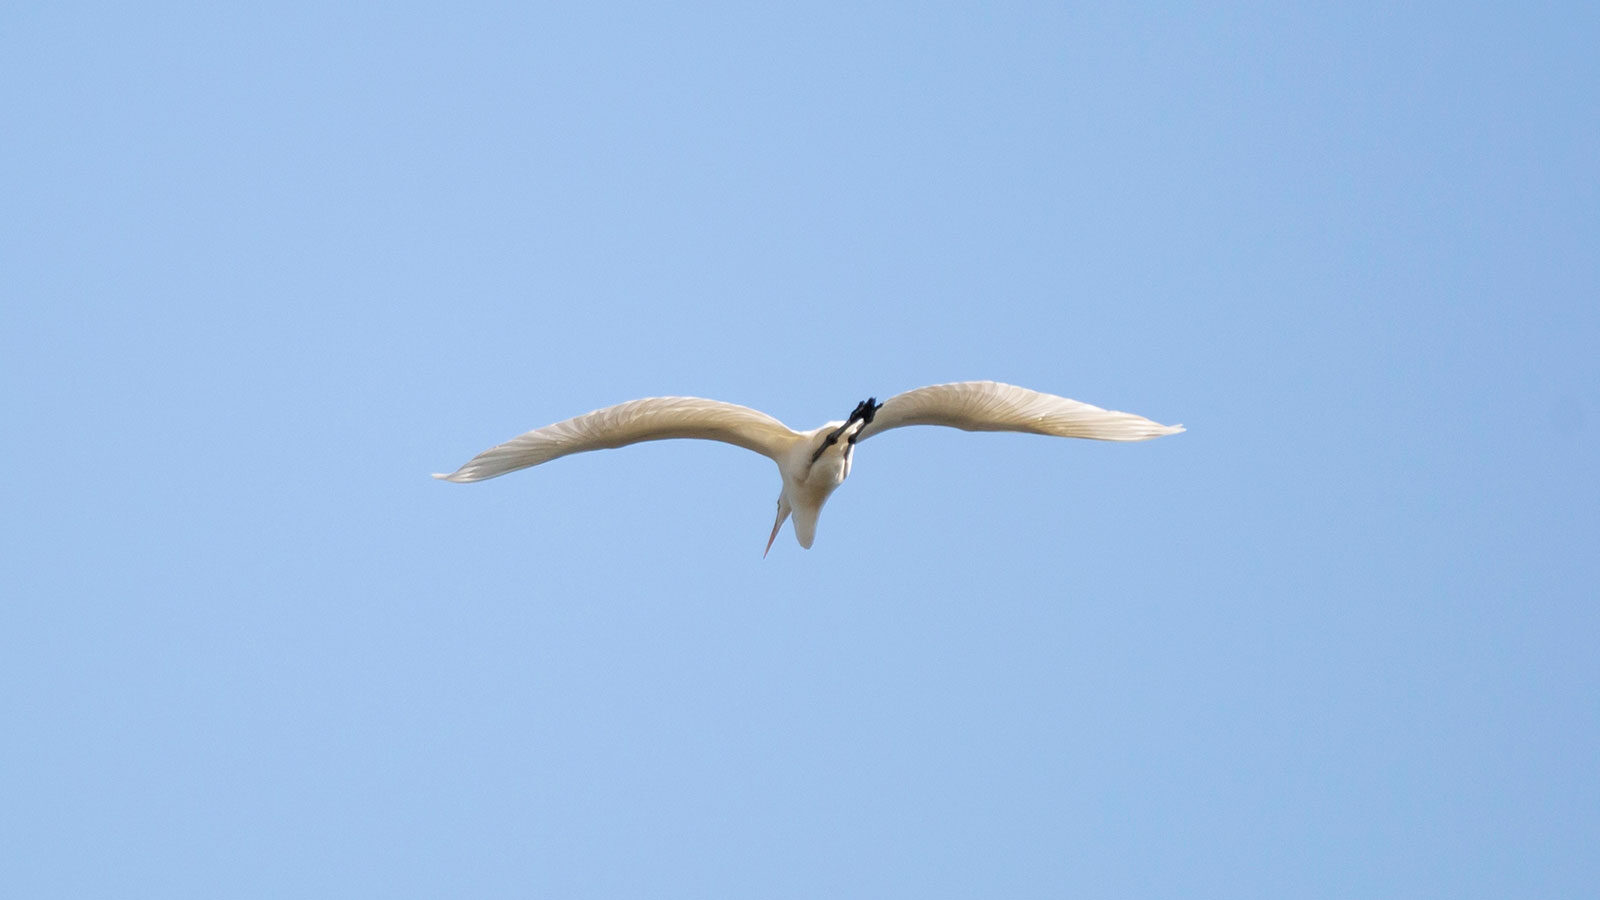 Great egret in flight through a blue sky